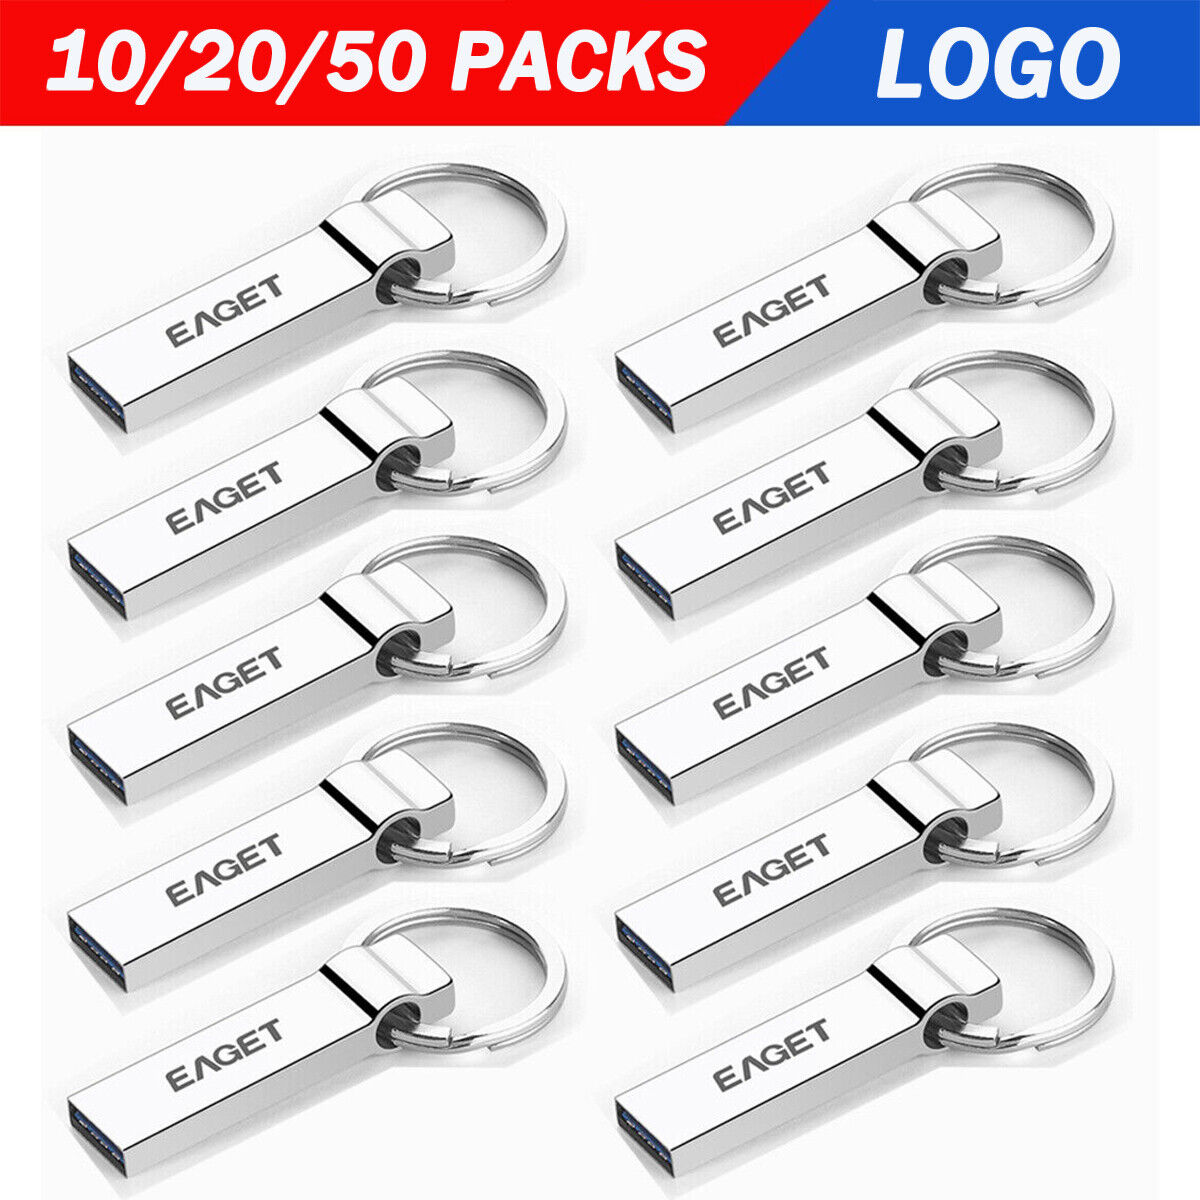 Lot 10/20/50PCS 1/2/4/8/16GB Key Ring Metal USB Flash Drive Storage Custom Logo